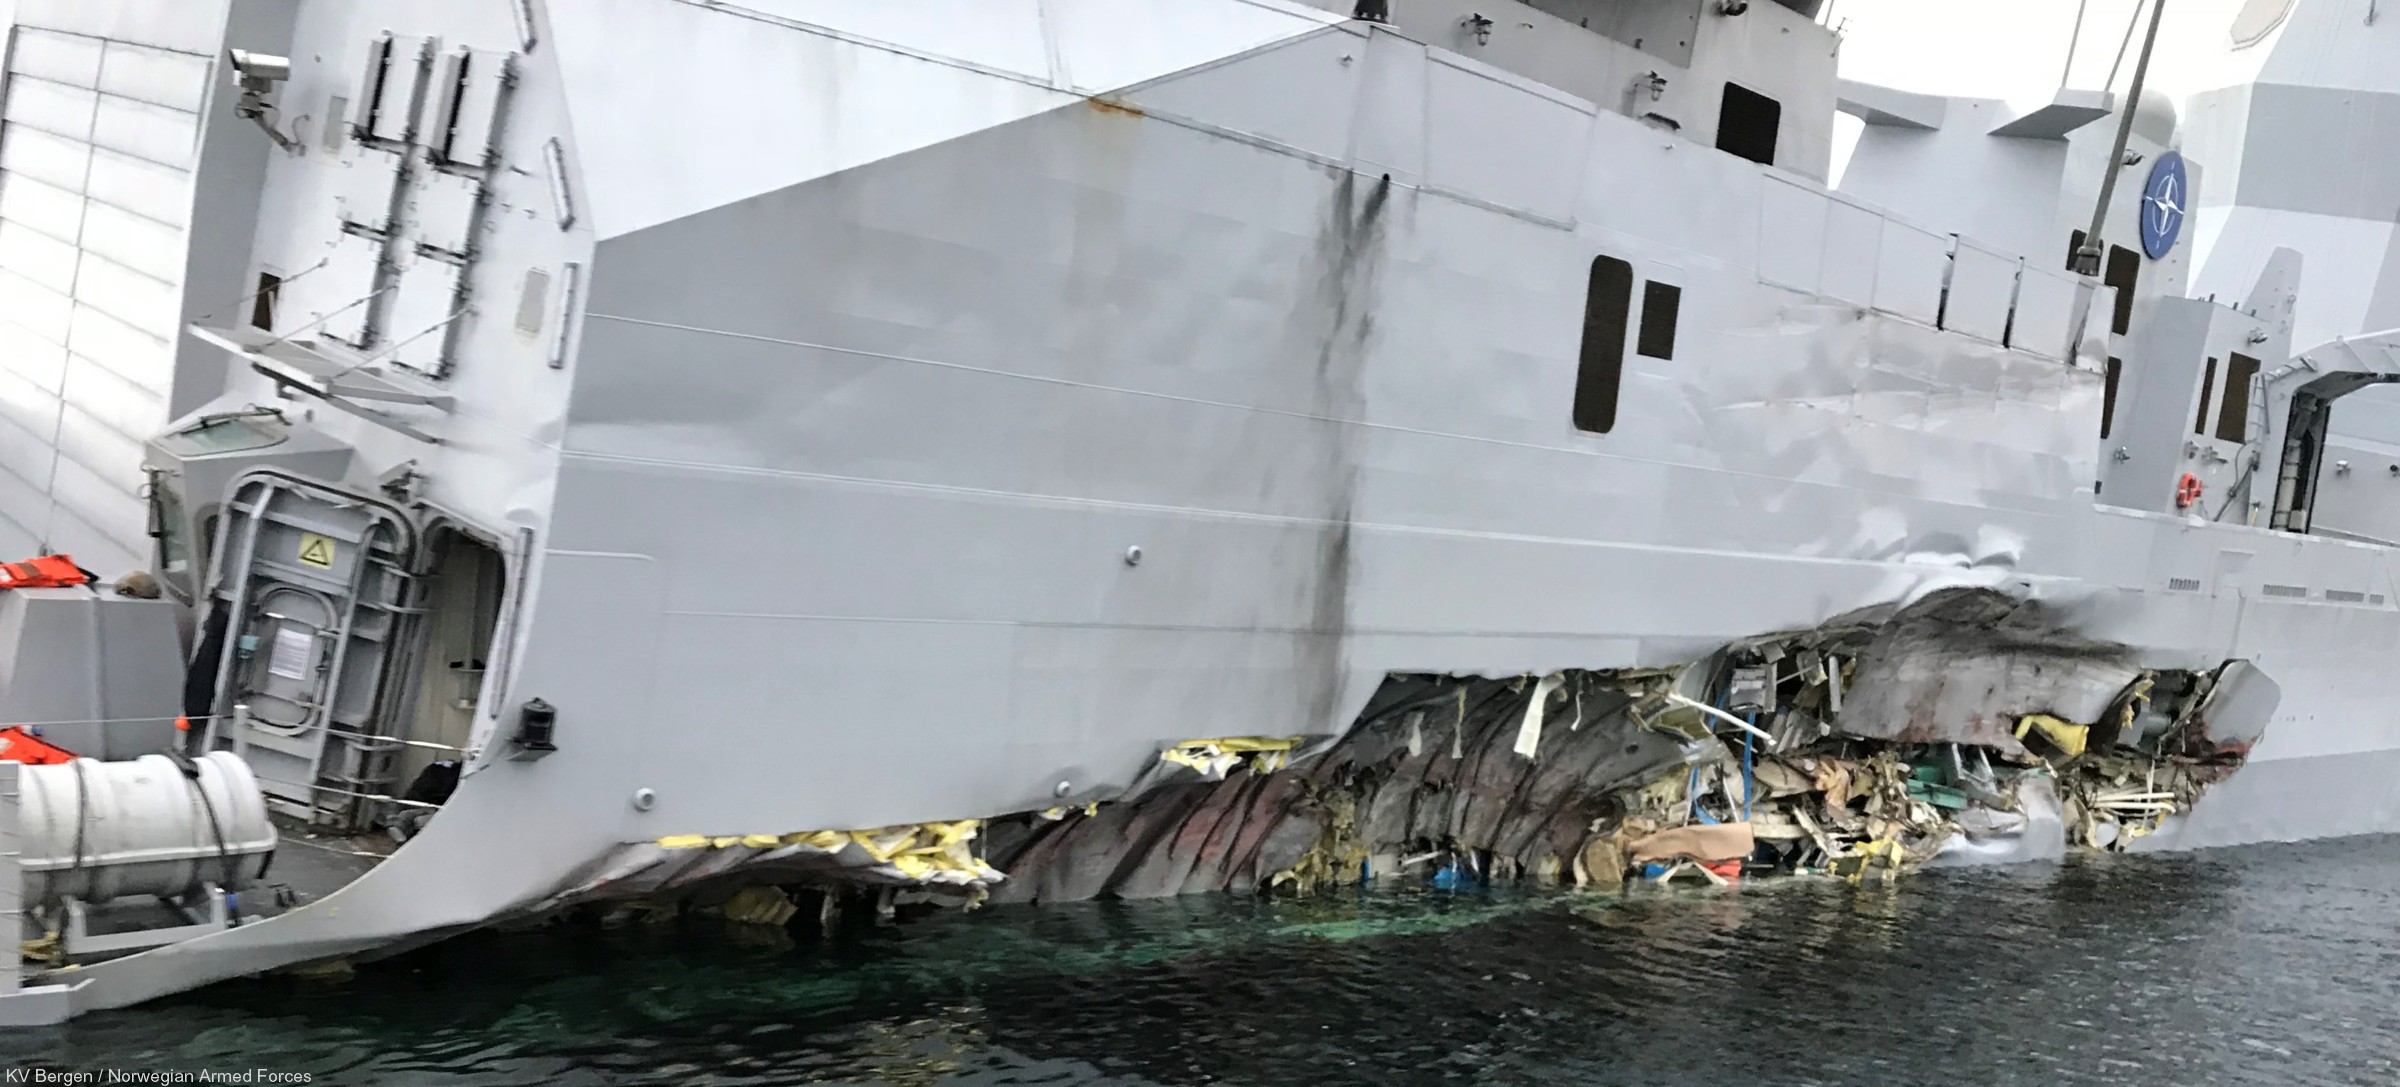 f-313 helge ingstad hnoms knm nansen class frigate royal norwegian navy 13 damage collision nato exercise 2018